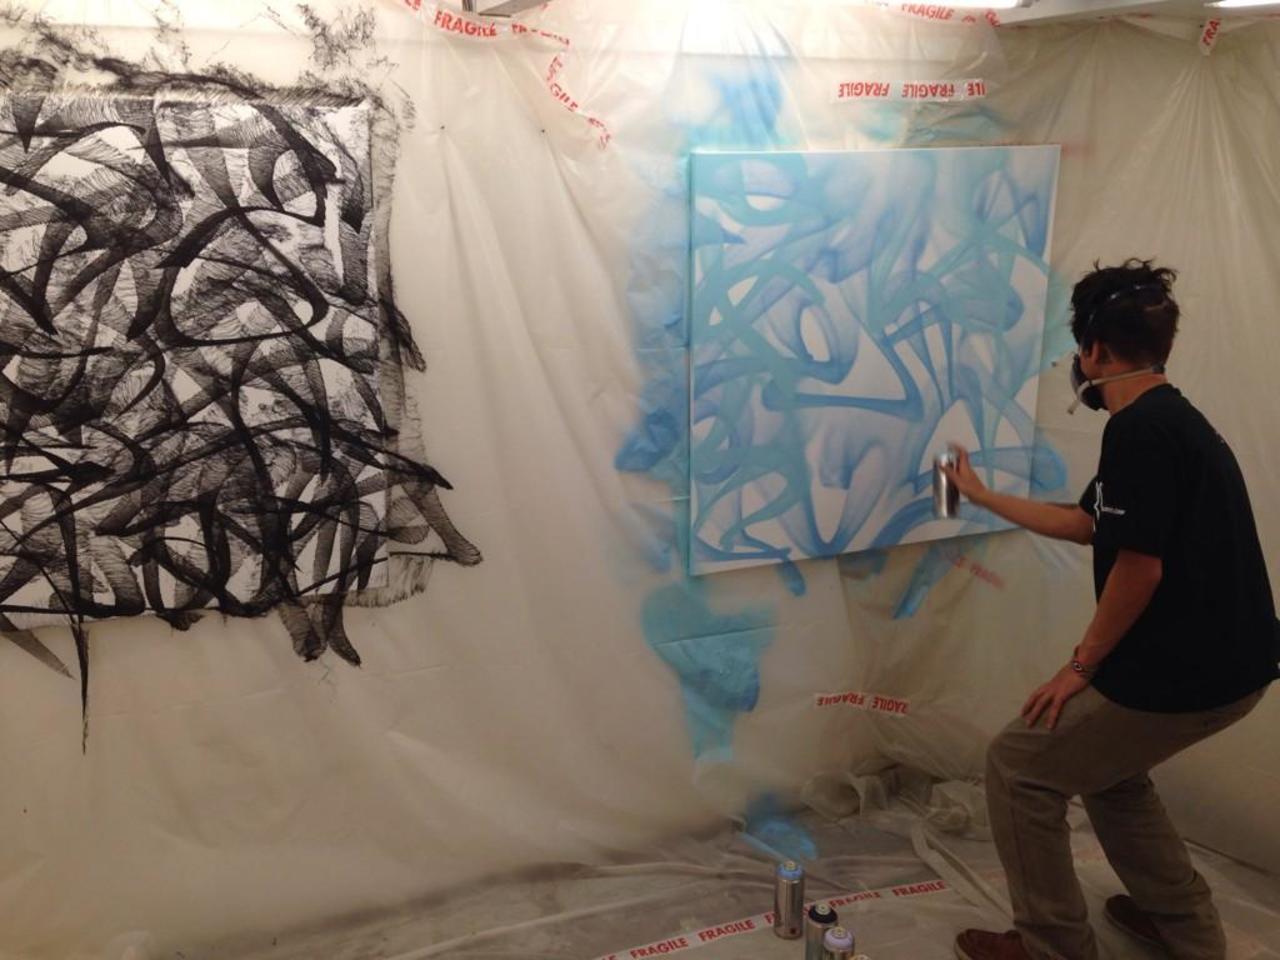 S L I K S in action at Gallery Brugier Rigail #art #sliks #paris #streetart #graffiti http://t.co/IyK3btwDfD